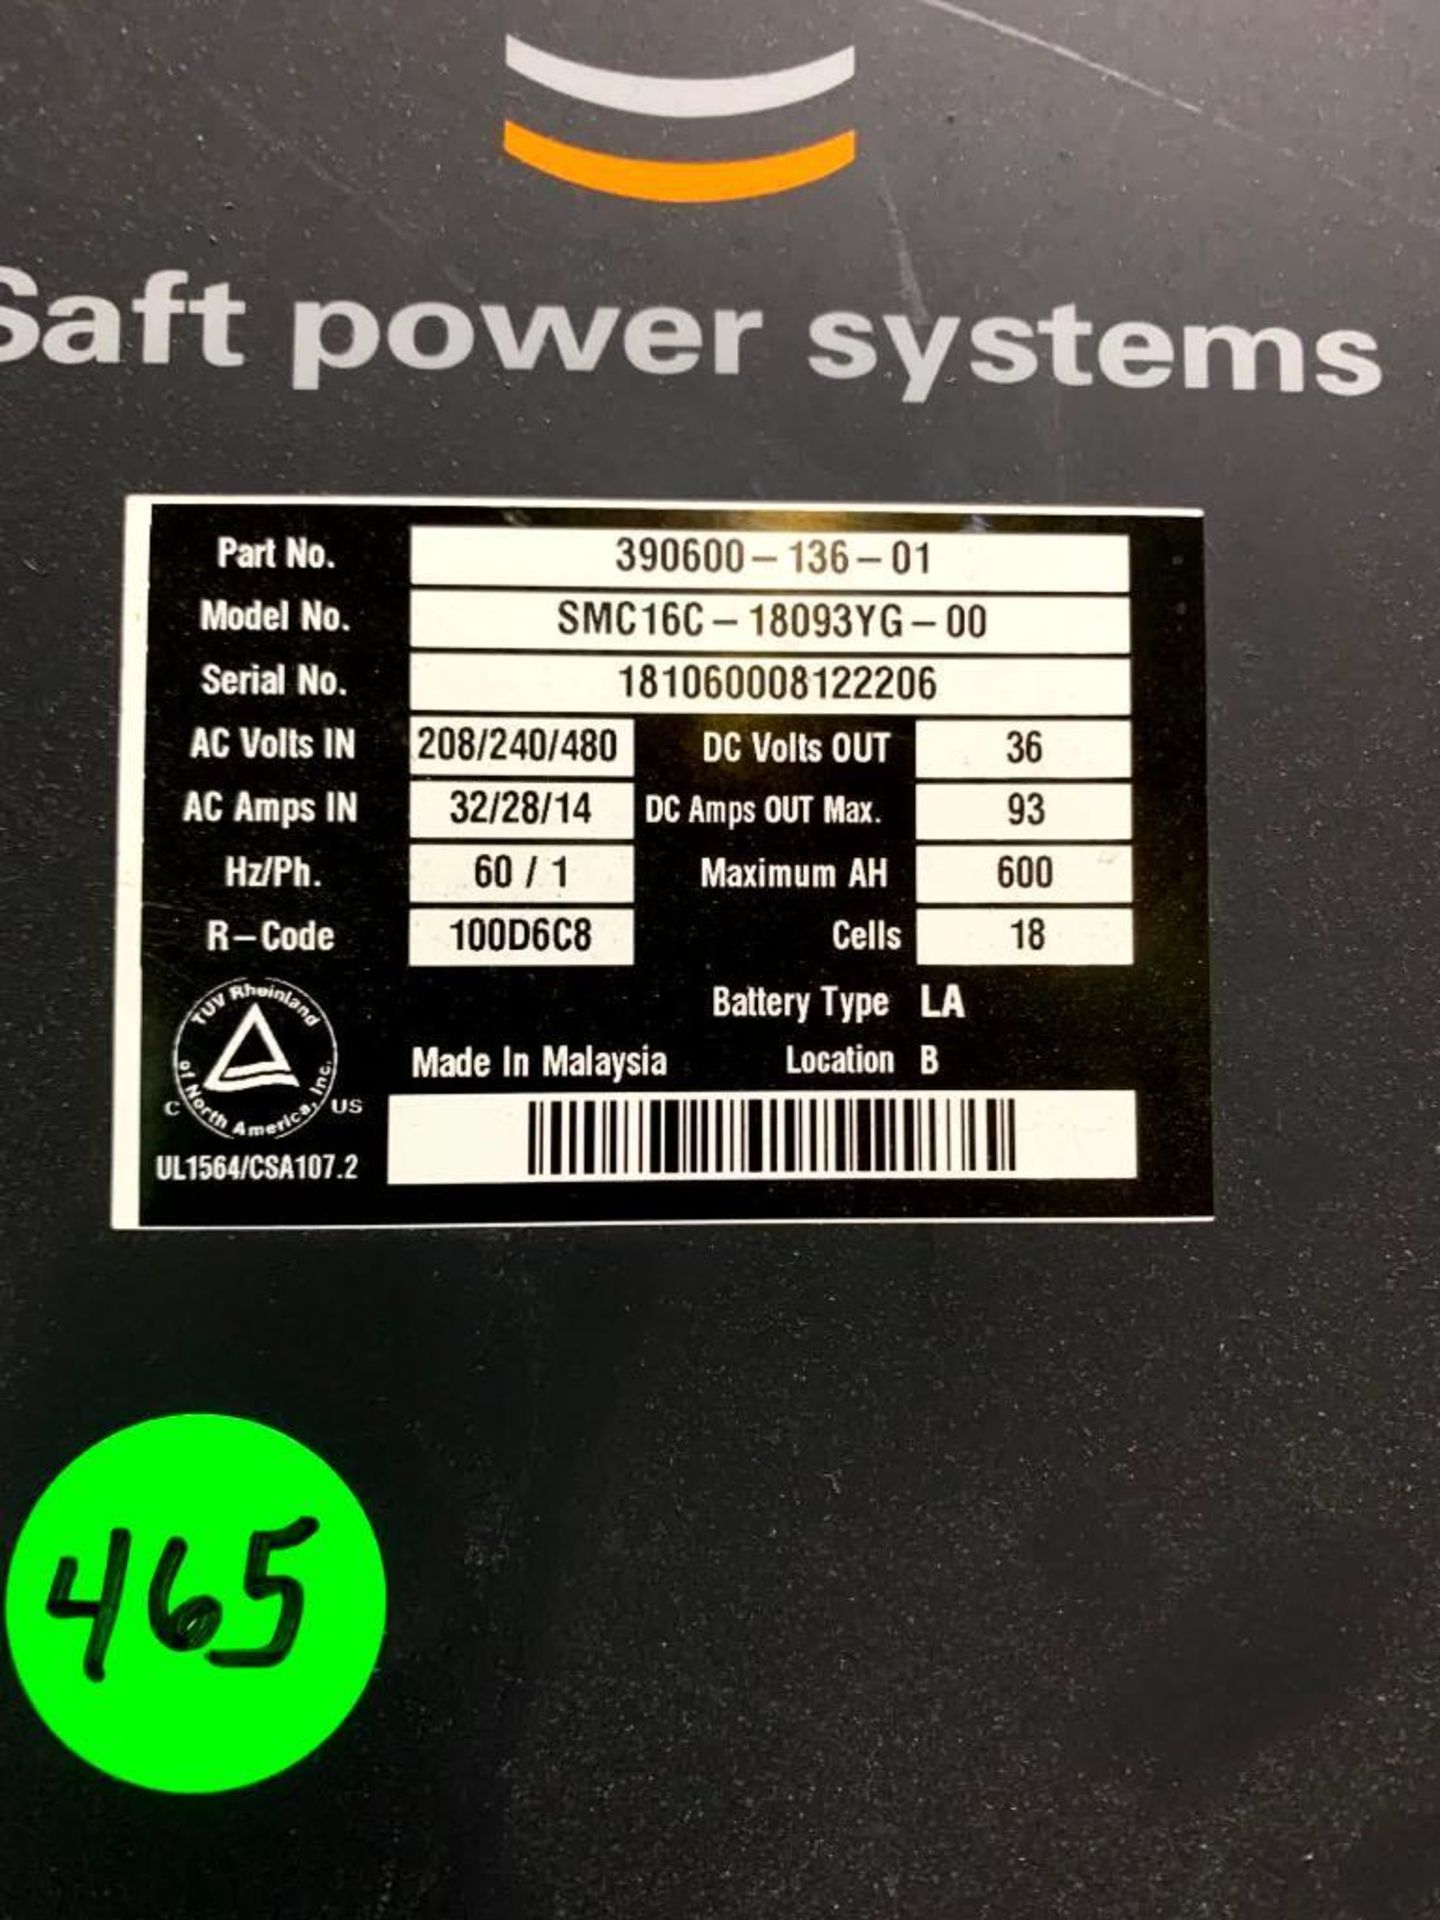 Saft 36 V Battery Charger, Model SMC16C, S/N 122206 (2nd Floor) - Image 3 of 3